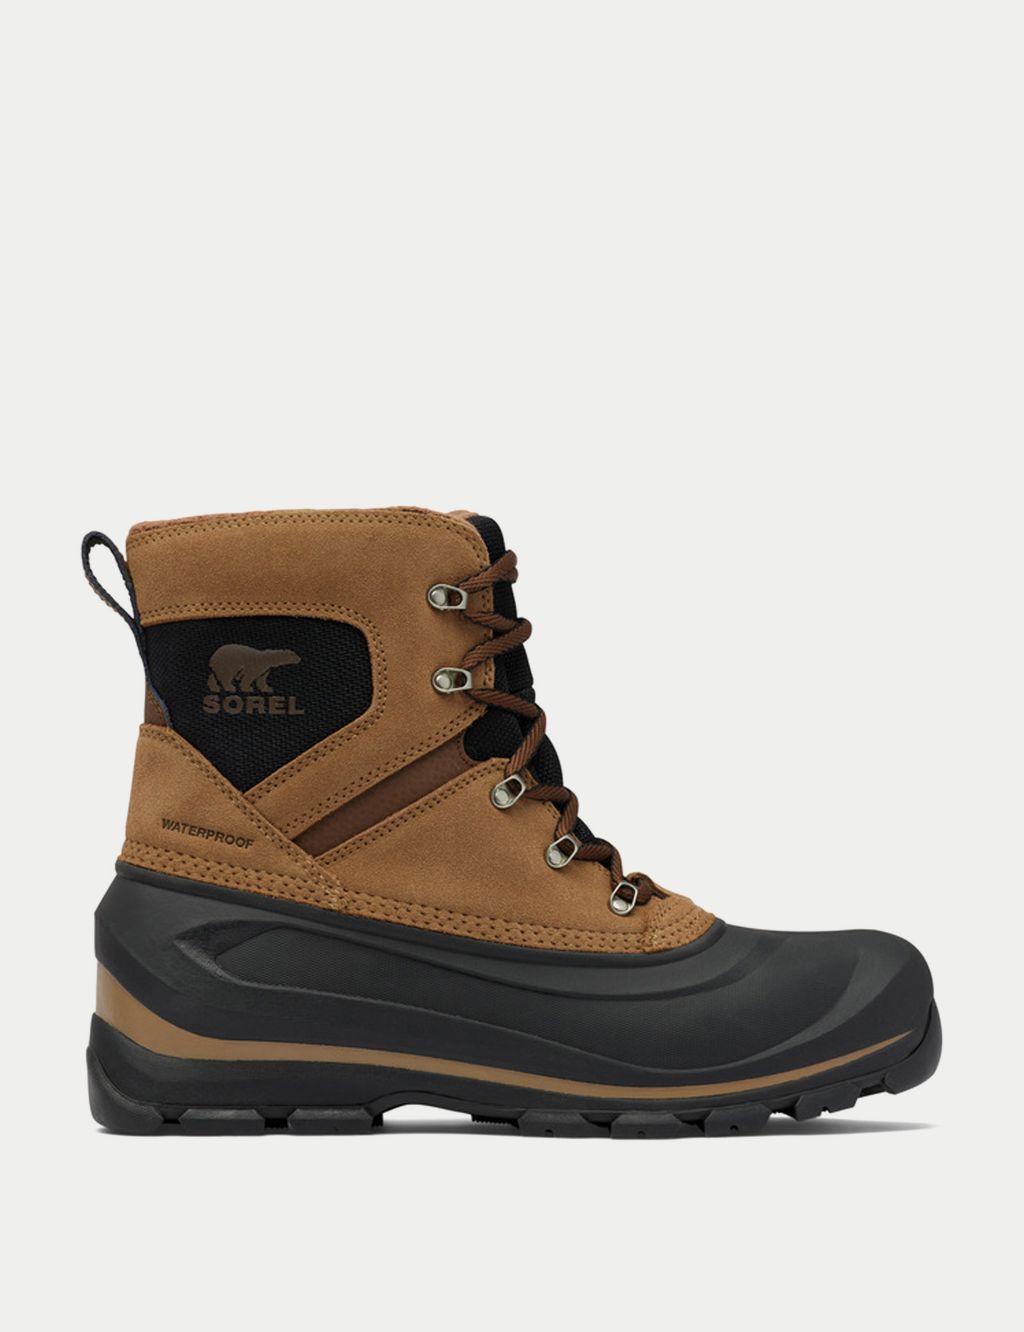 Buxton Leather Waterproof Walking Boots image 1